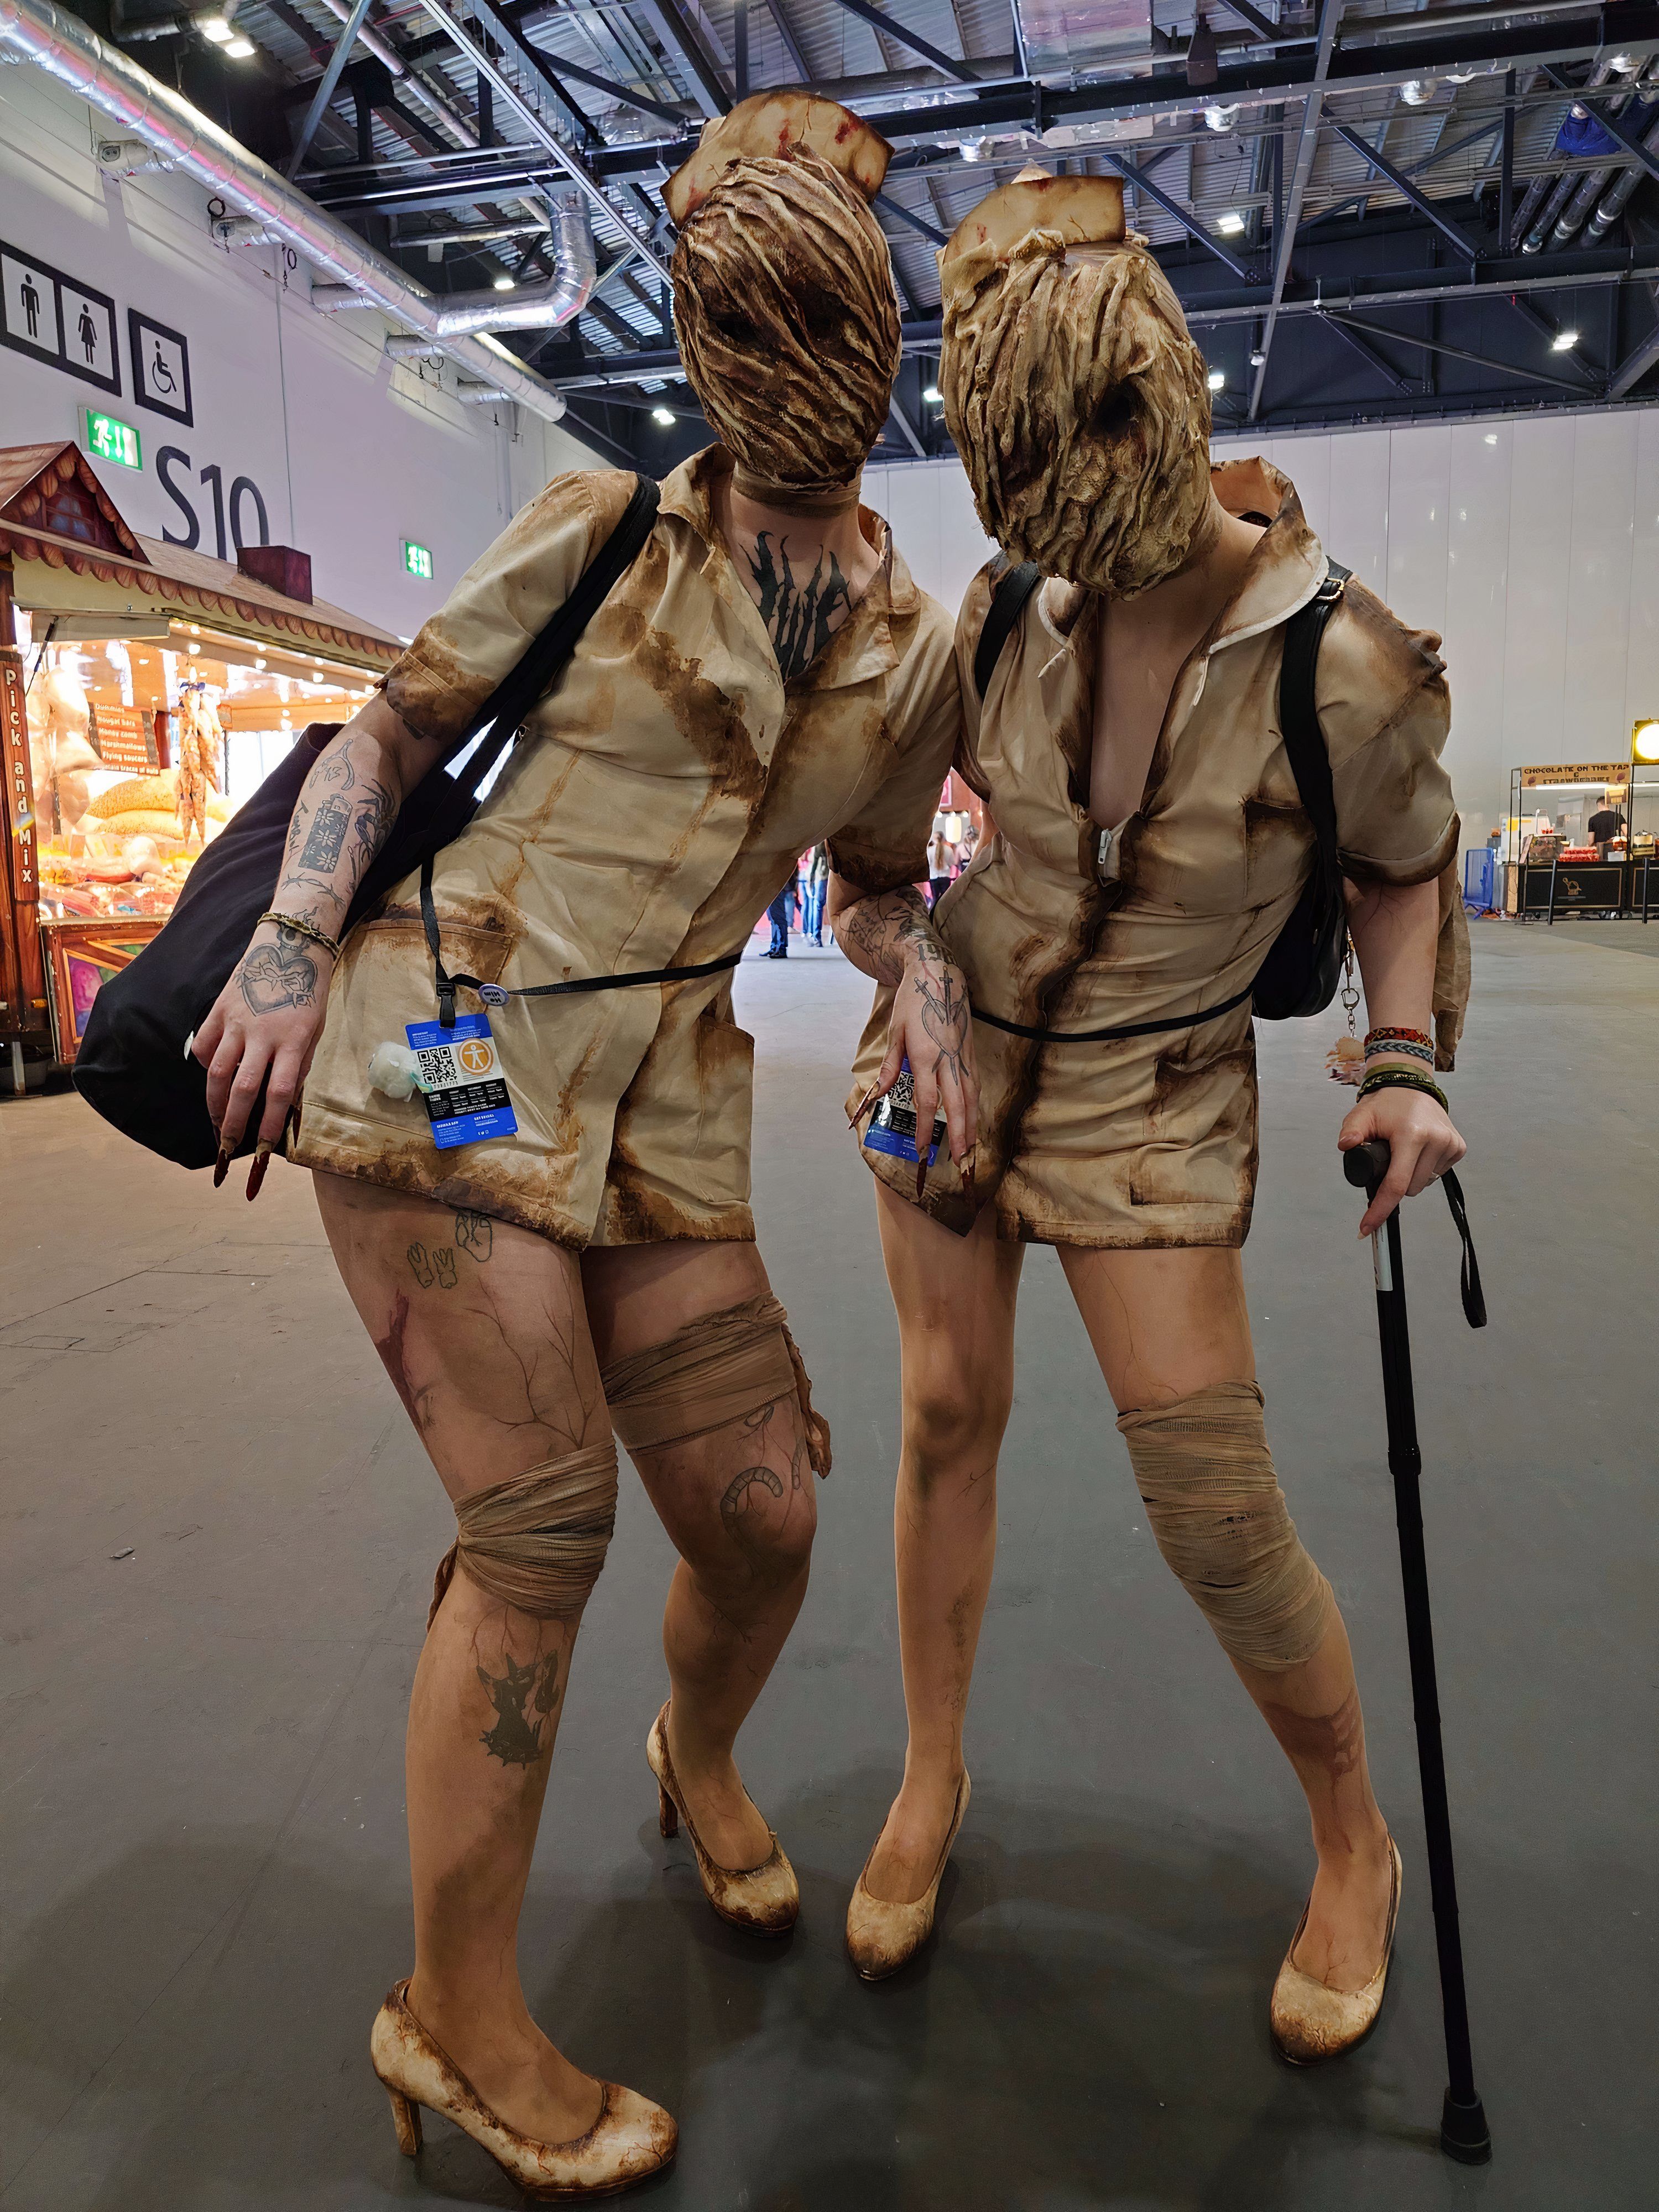 Cringeycosplaysz and Raidads as nurses from Silent Hills 2